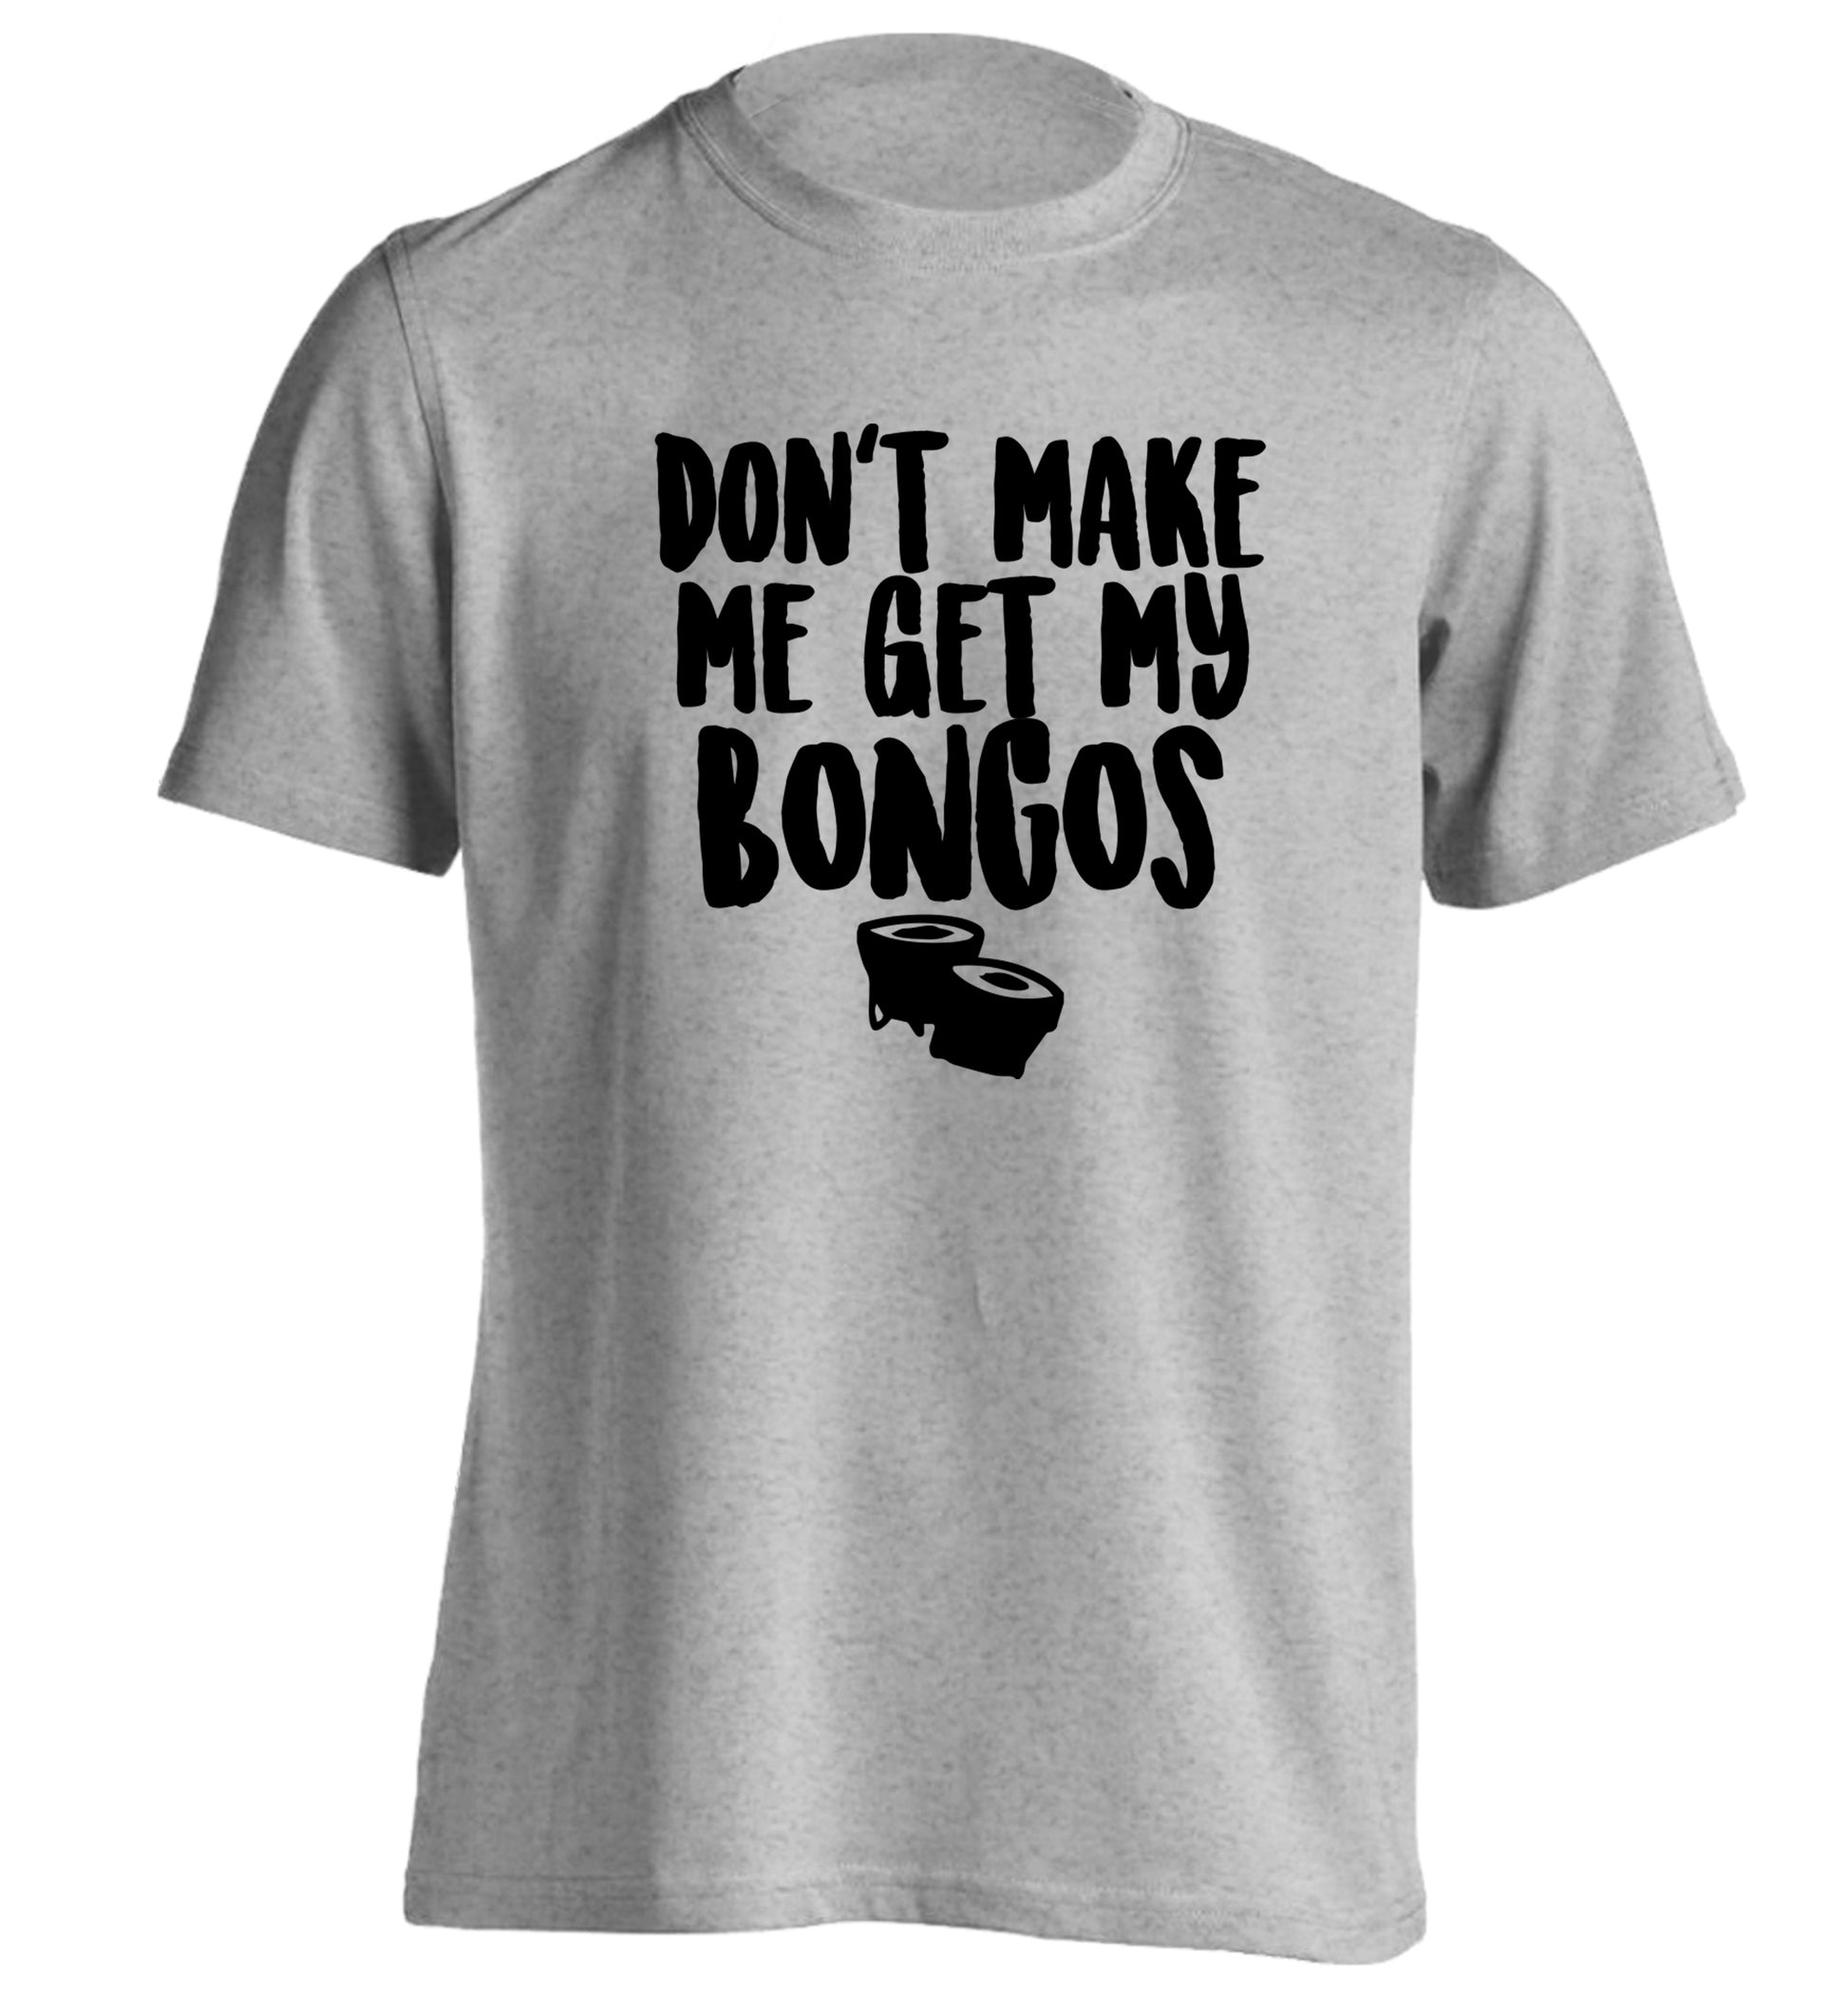 Don't make me get my bongos adults unisex grey Tshirt 2XL